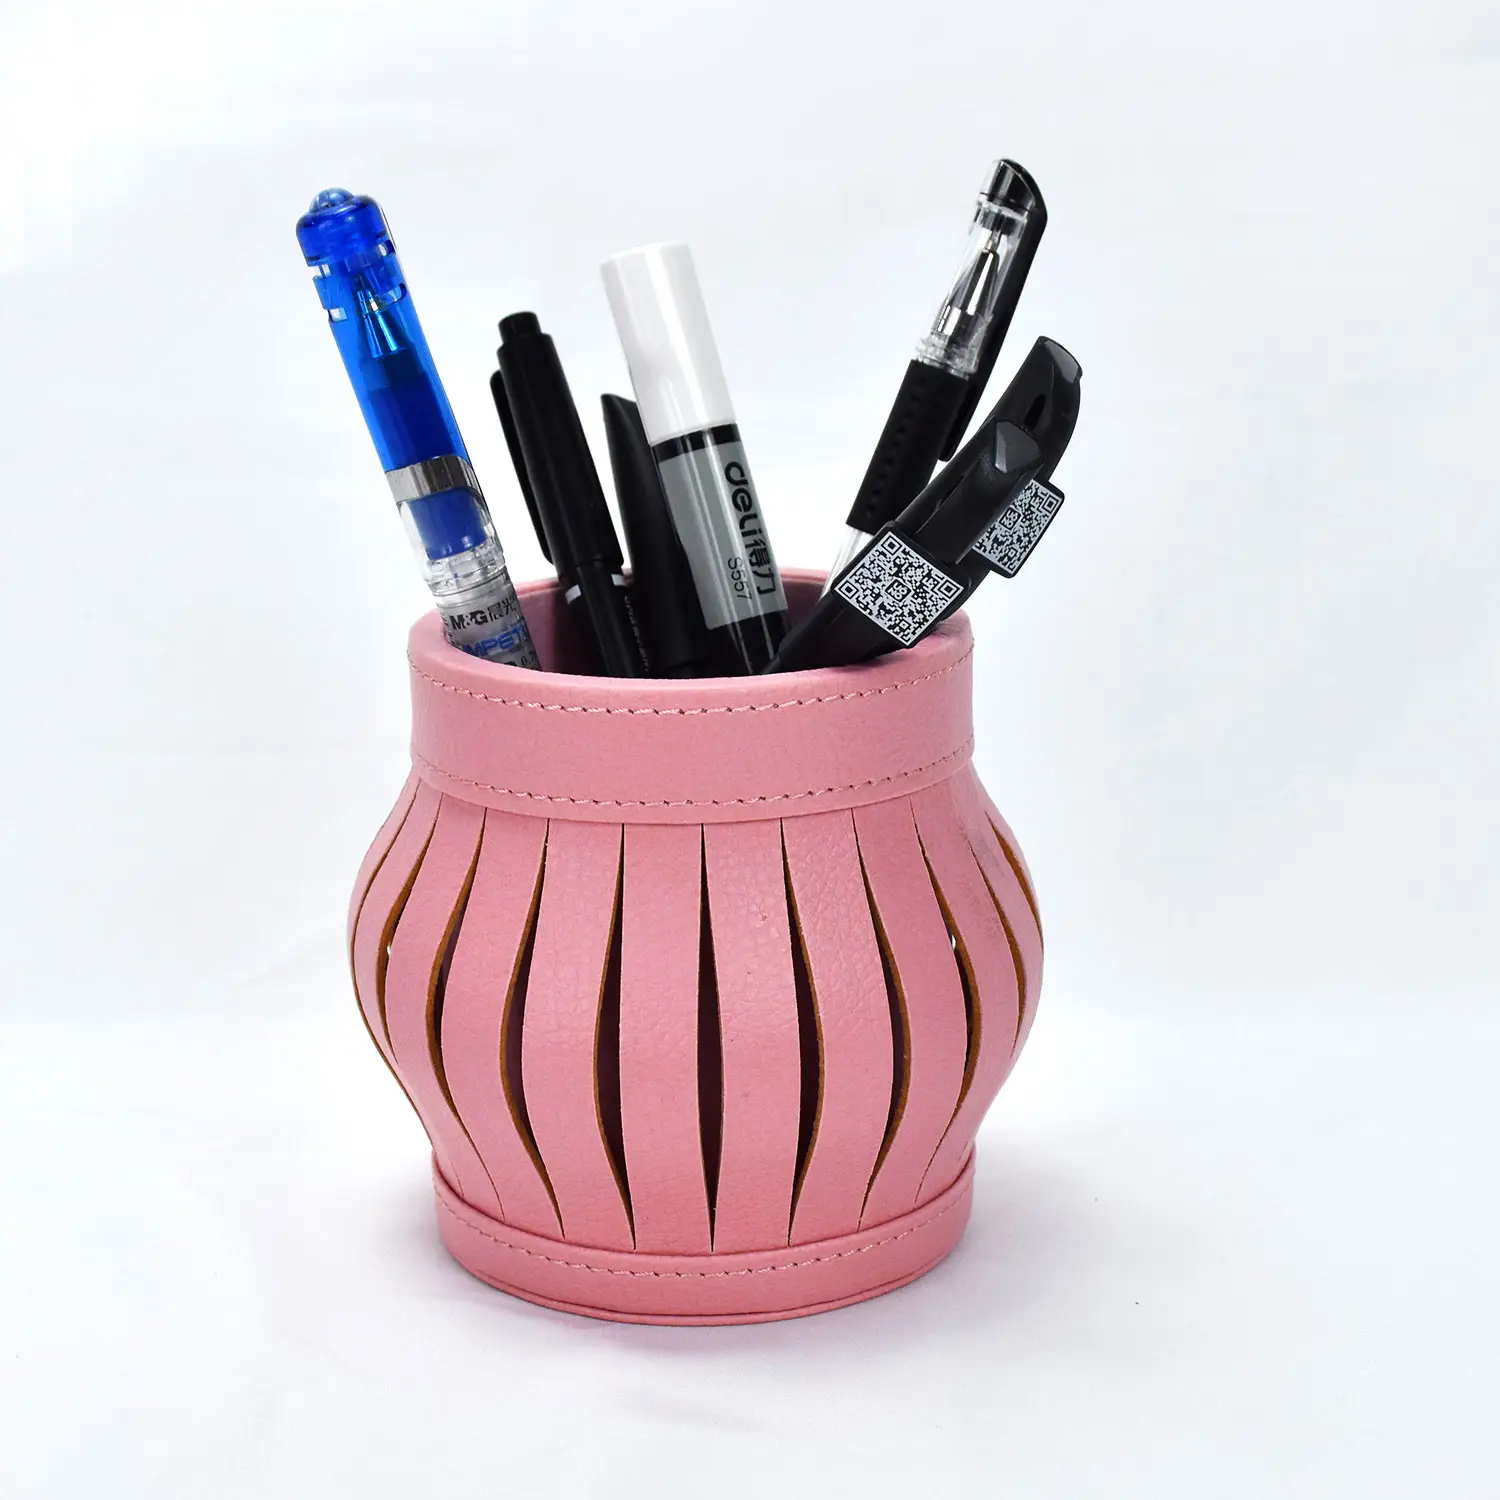 Customize PU Pencil Holder Pen Cup Makeup Brush Holder Pencil Cup Pot Desktop Stationery Organizer Pen Container